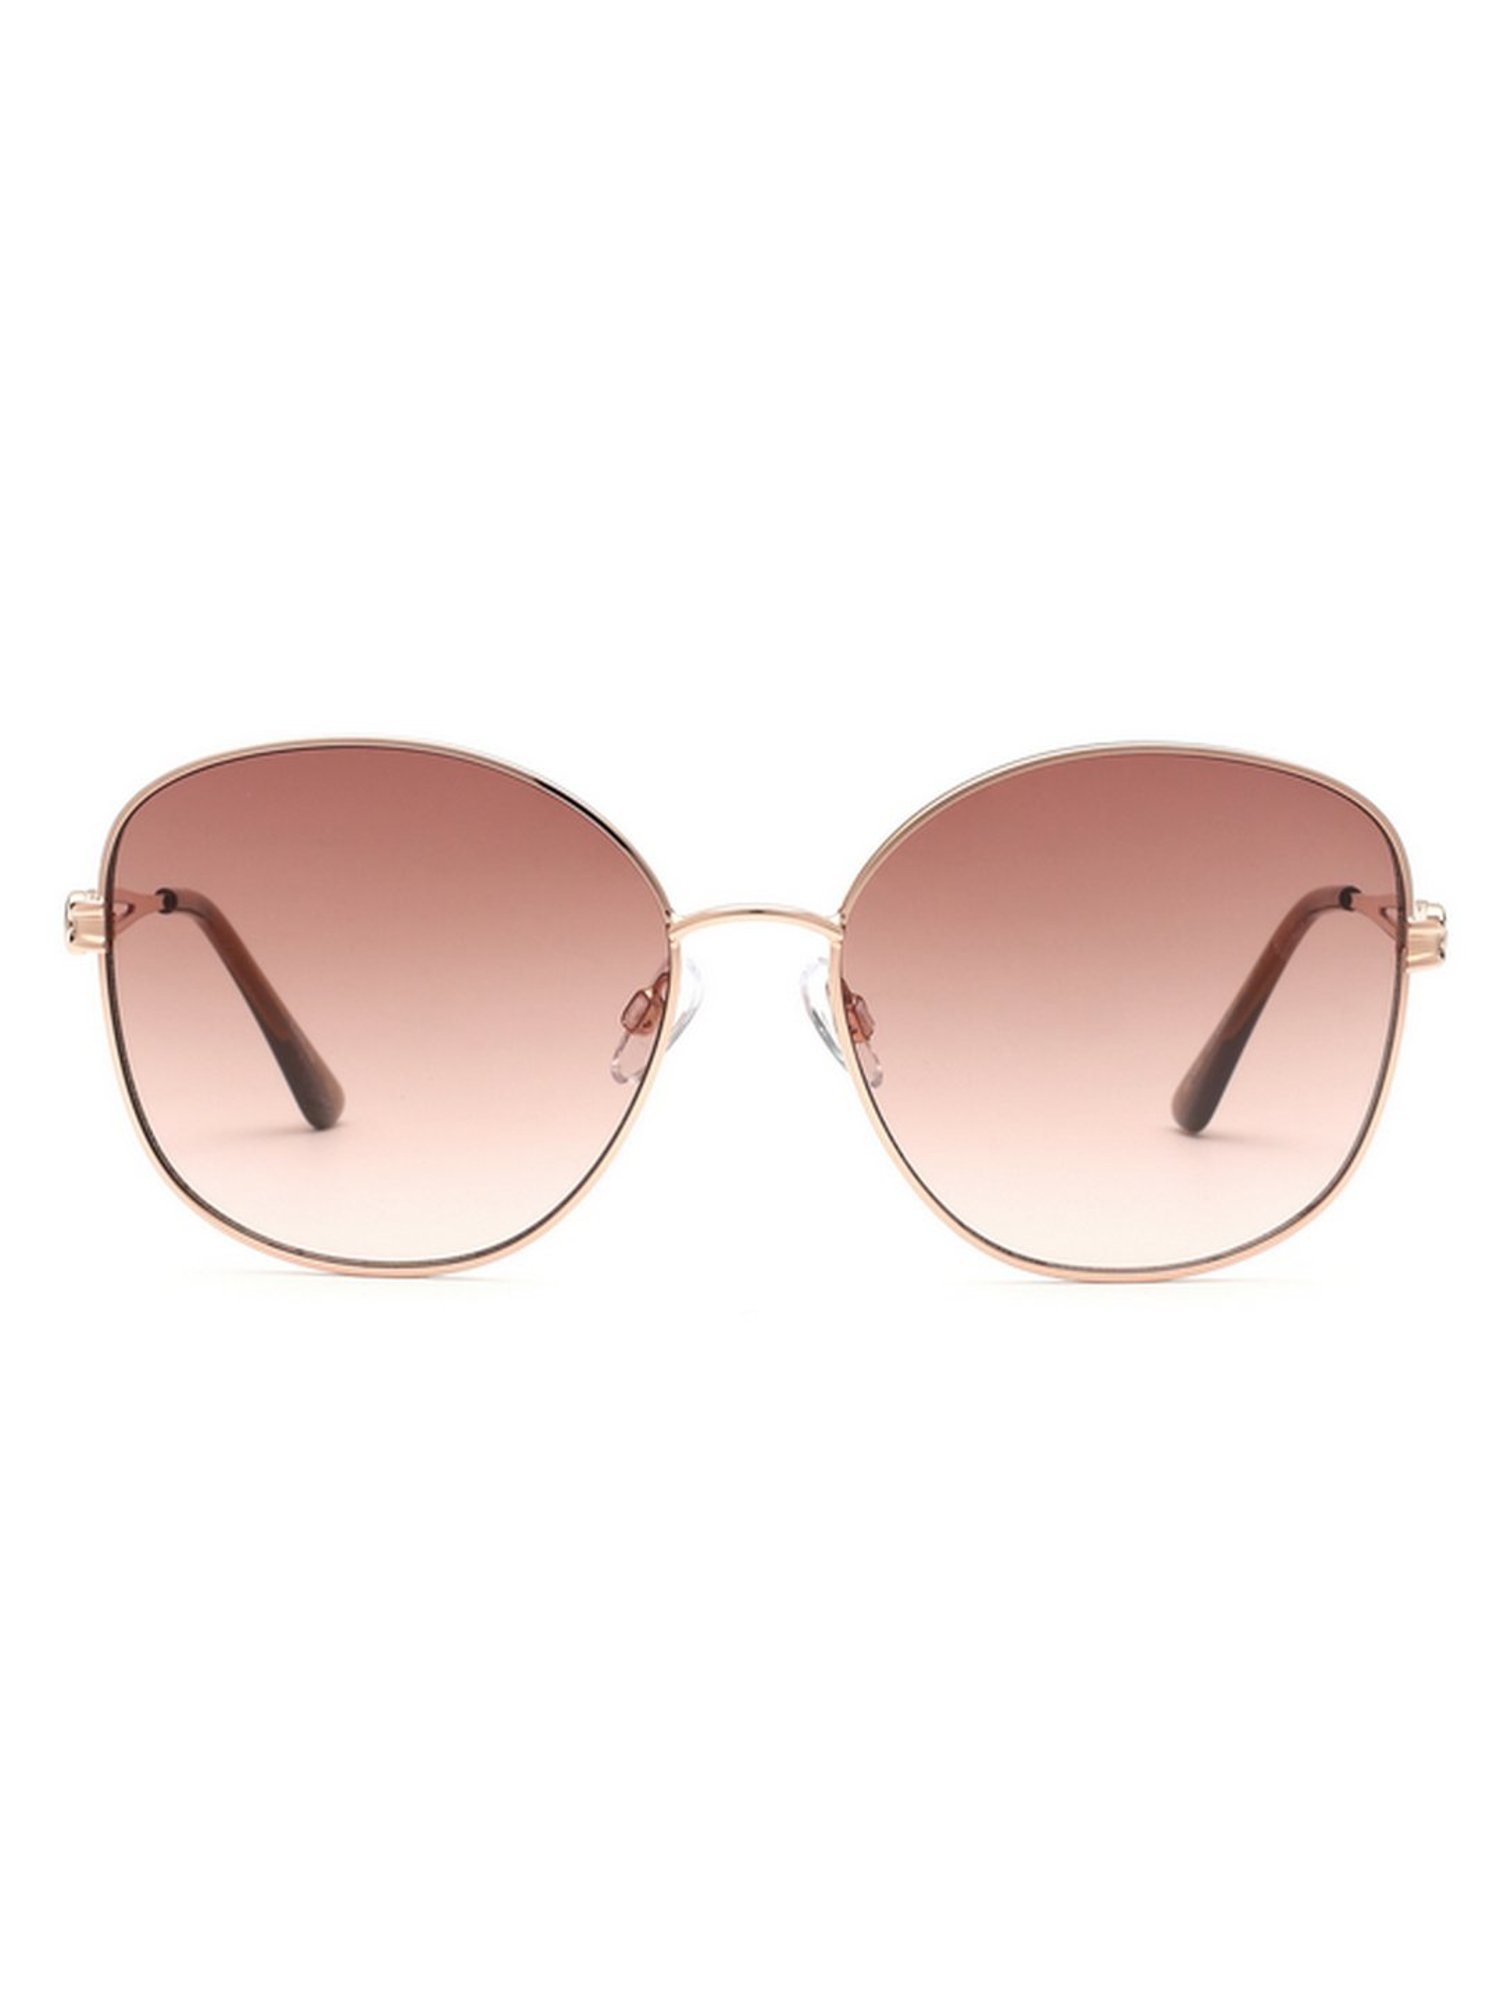 Victoria Secret PINK PK0039 30Z Rose Gold Round Metal Sunglasses 55-20-140  PK30Z | eBay